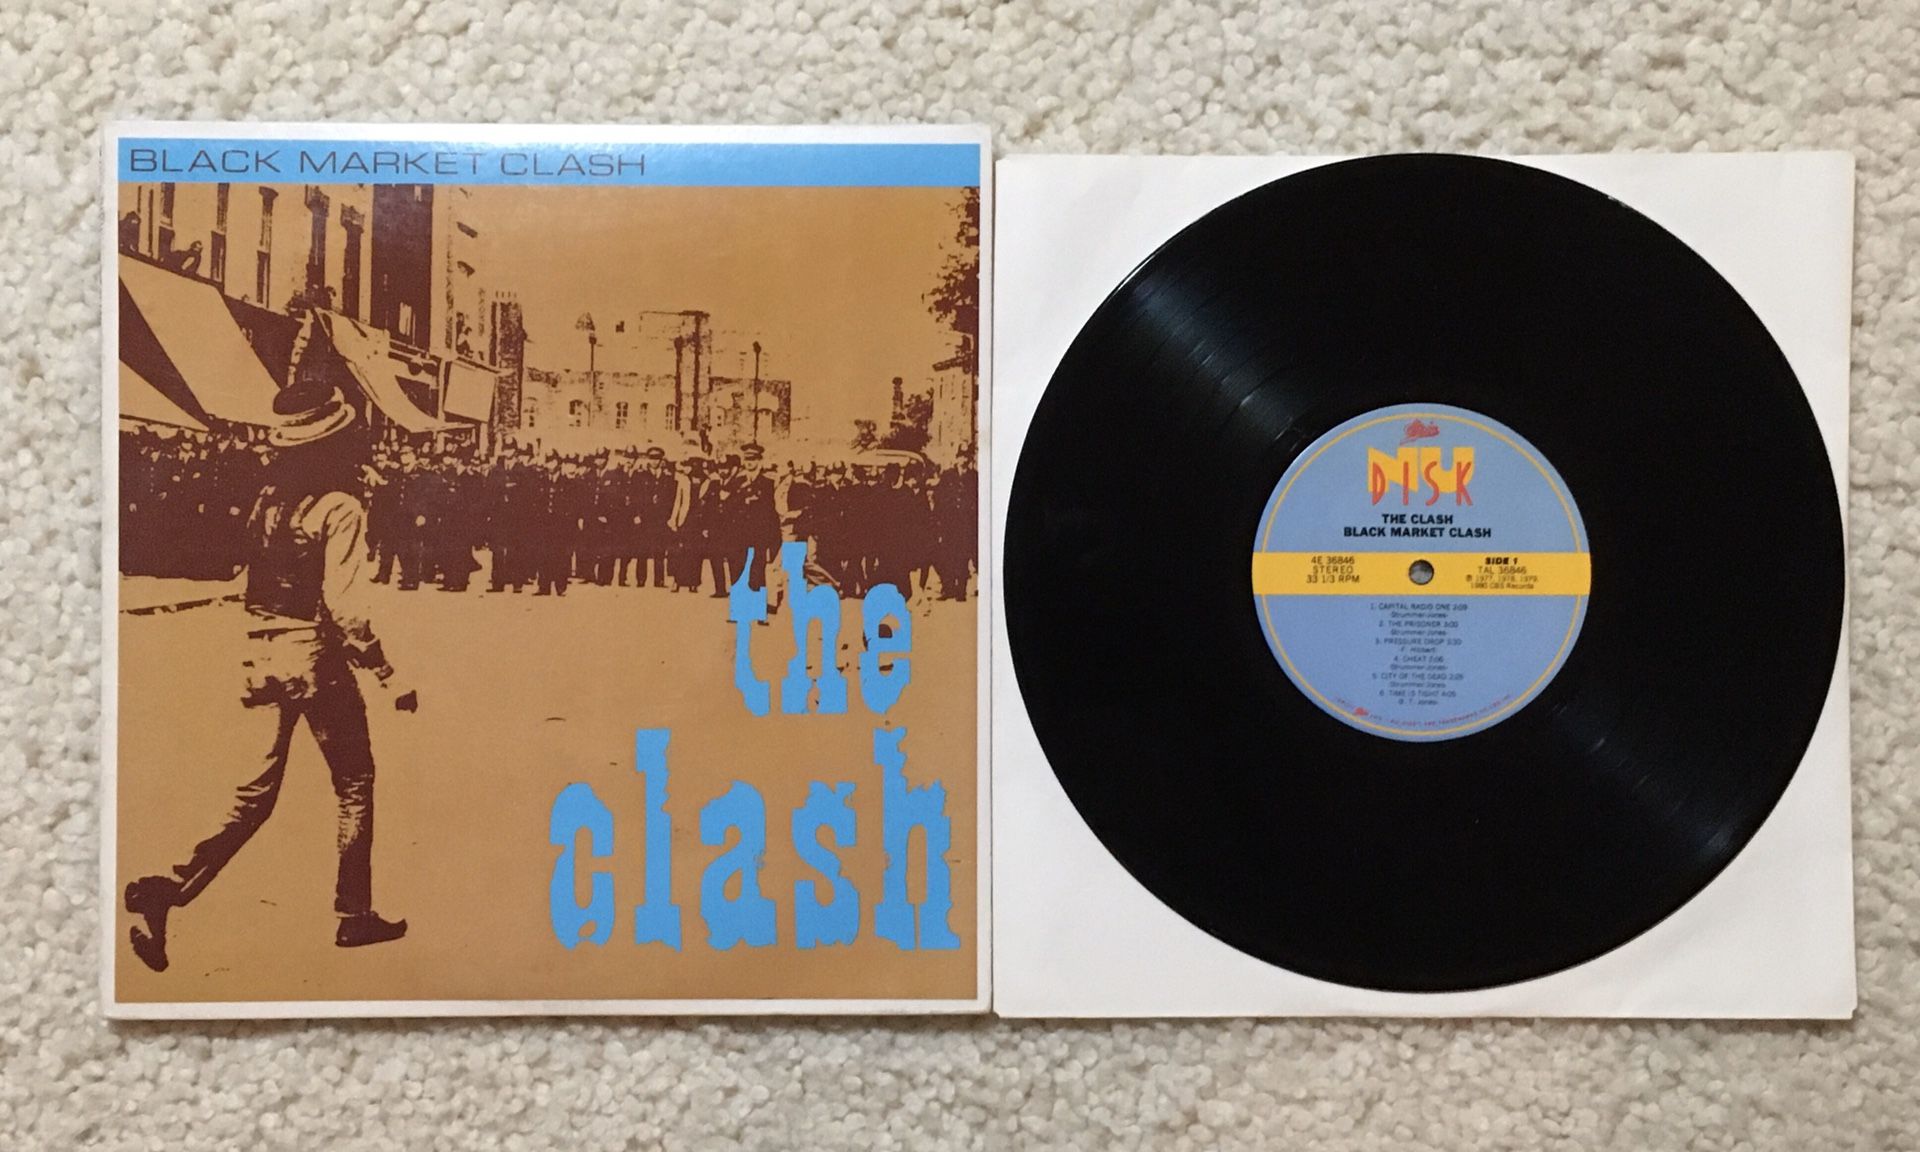 The Clash “Black Market Clash” vinyl 10” EP compilation 1980 Epic Records Original 1st Press not a reissue beautiful collector’s copy Punk Rock Reggae